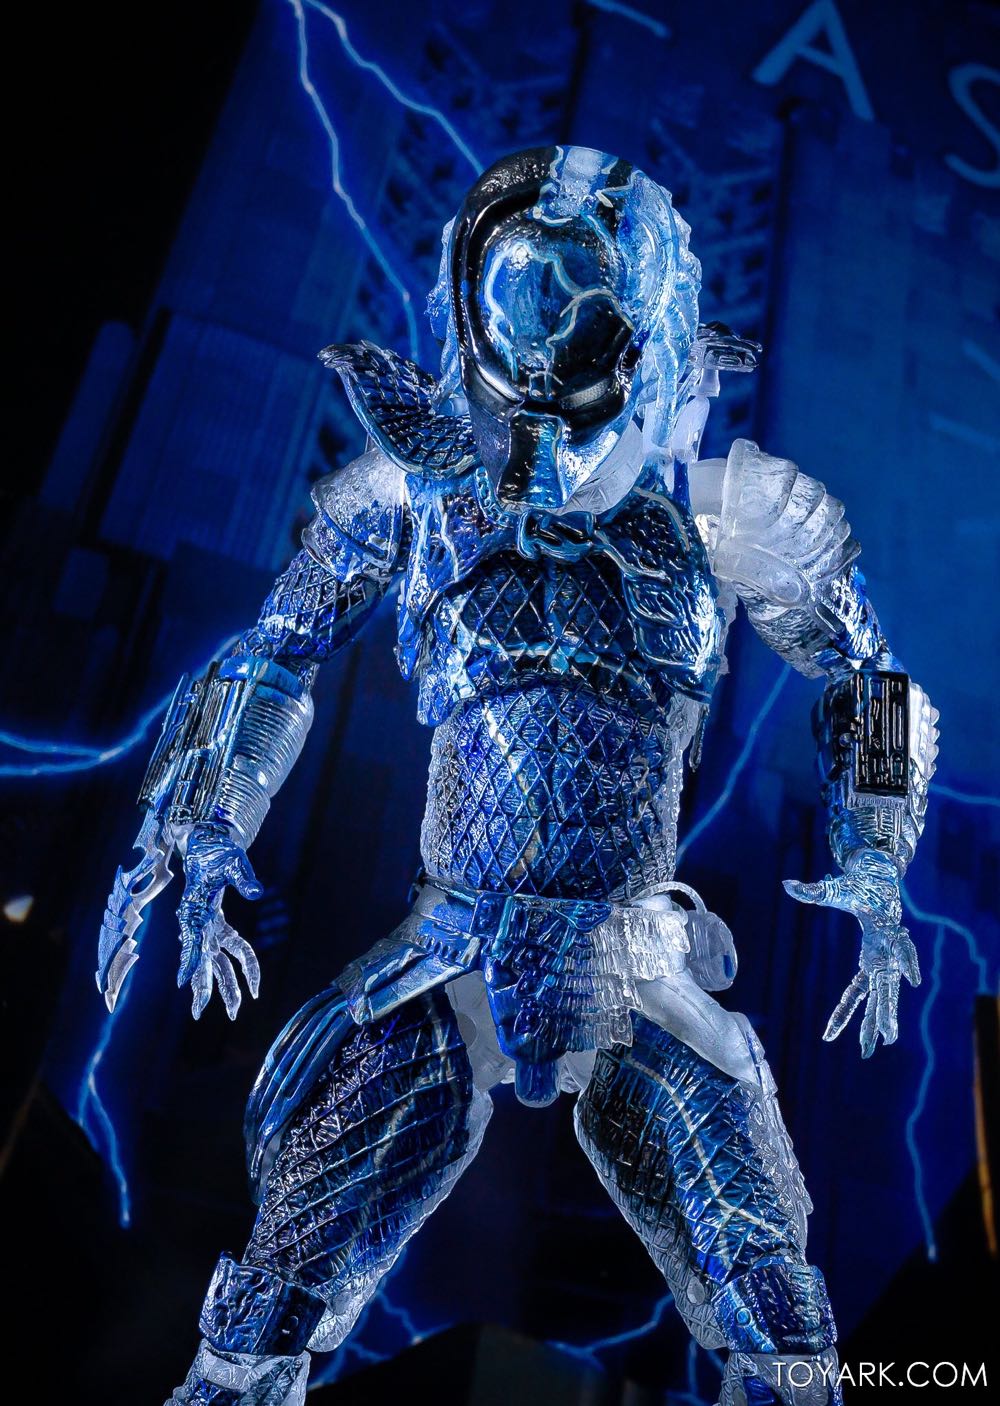 Neca - Ultimate City Demon (Predator 2) - Neca (Predator 2) action figure collectible [Barcode 634482515884] - Main Image 4